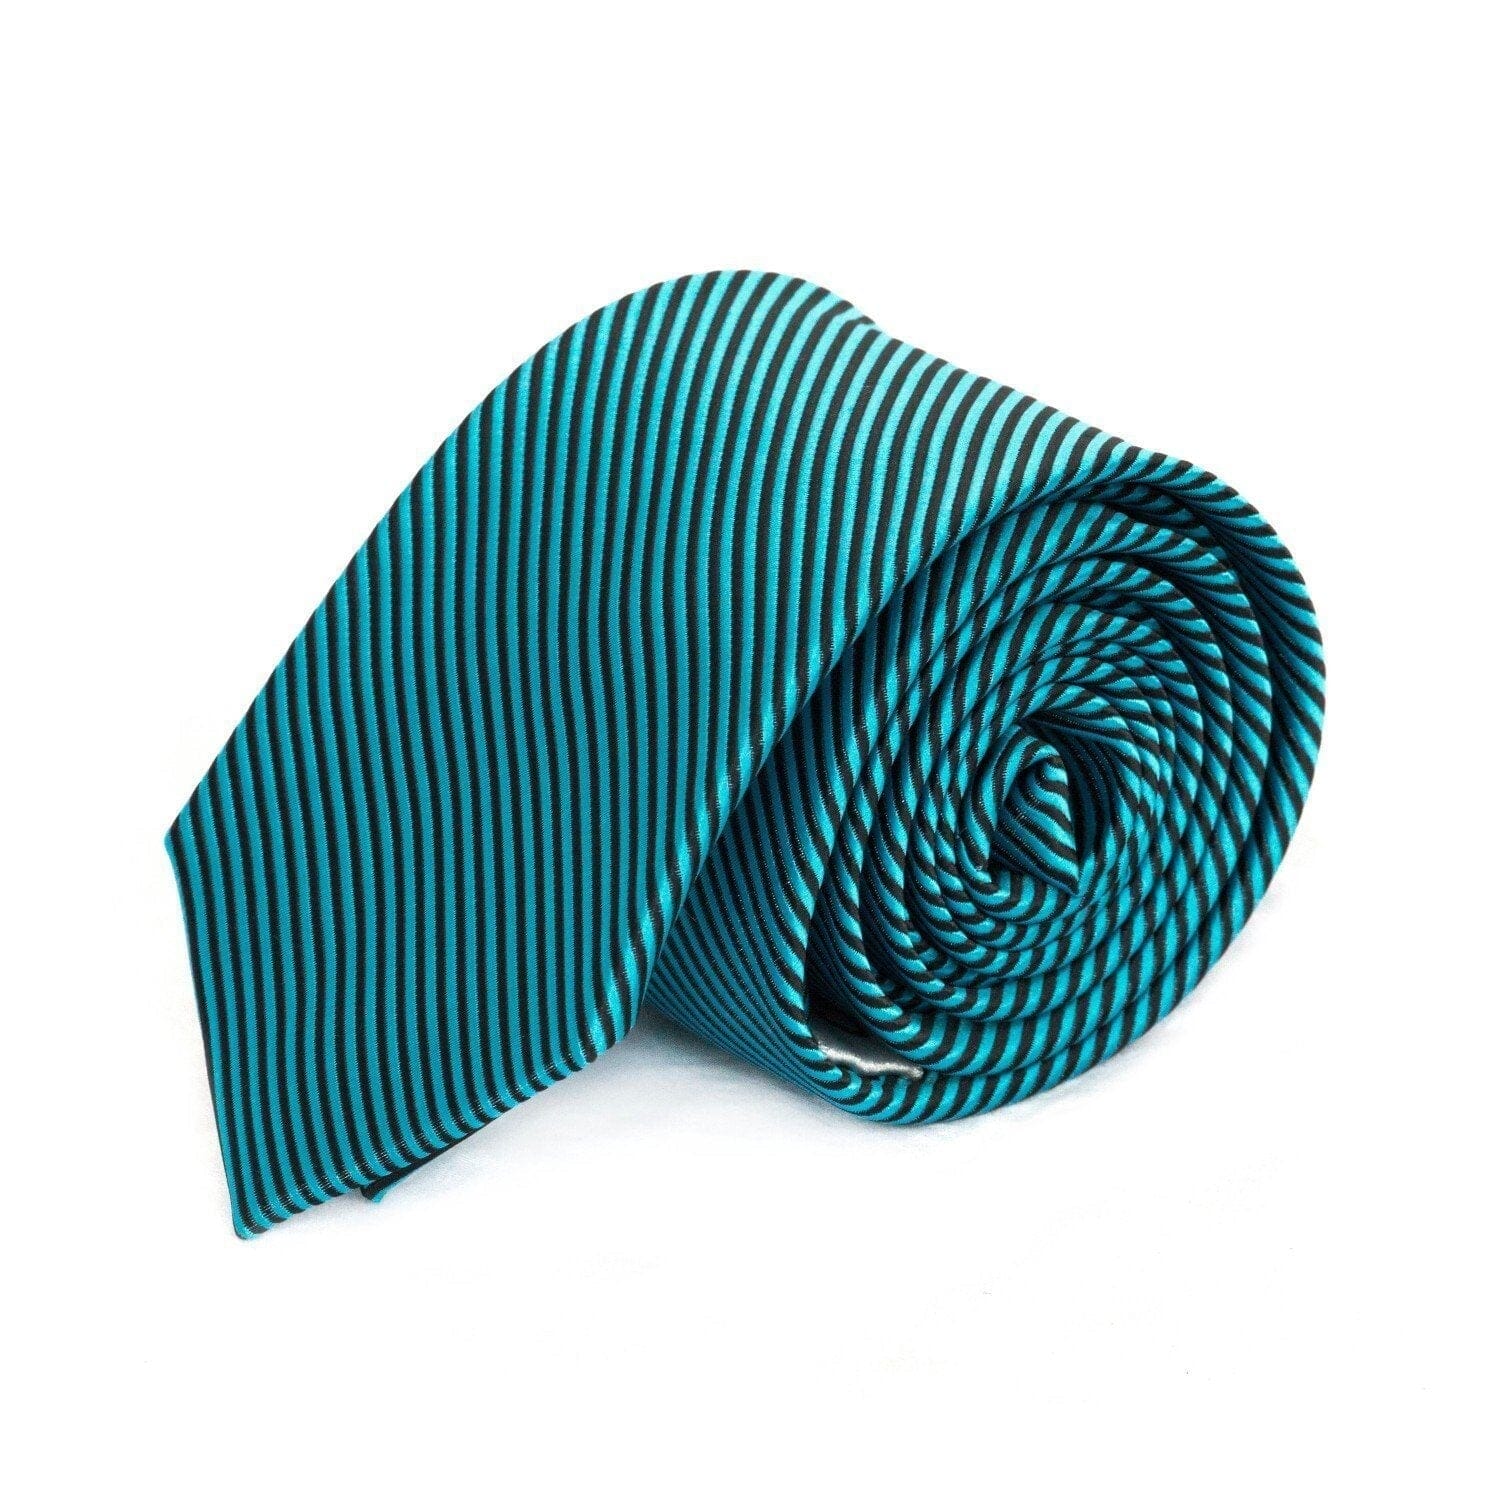 Teal and Black Stripe MF Tie Ties Cuffed.com.au 